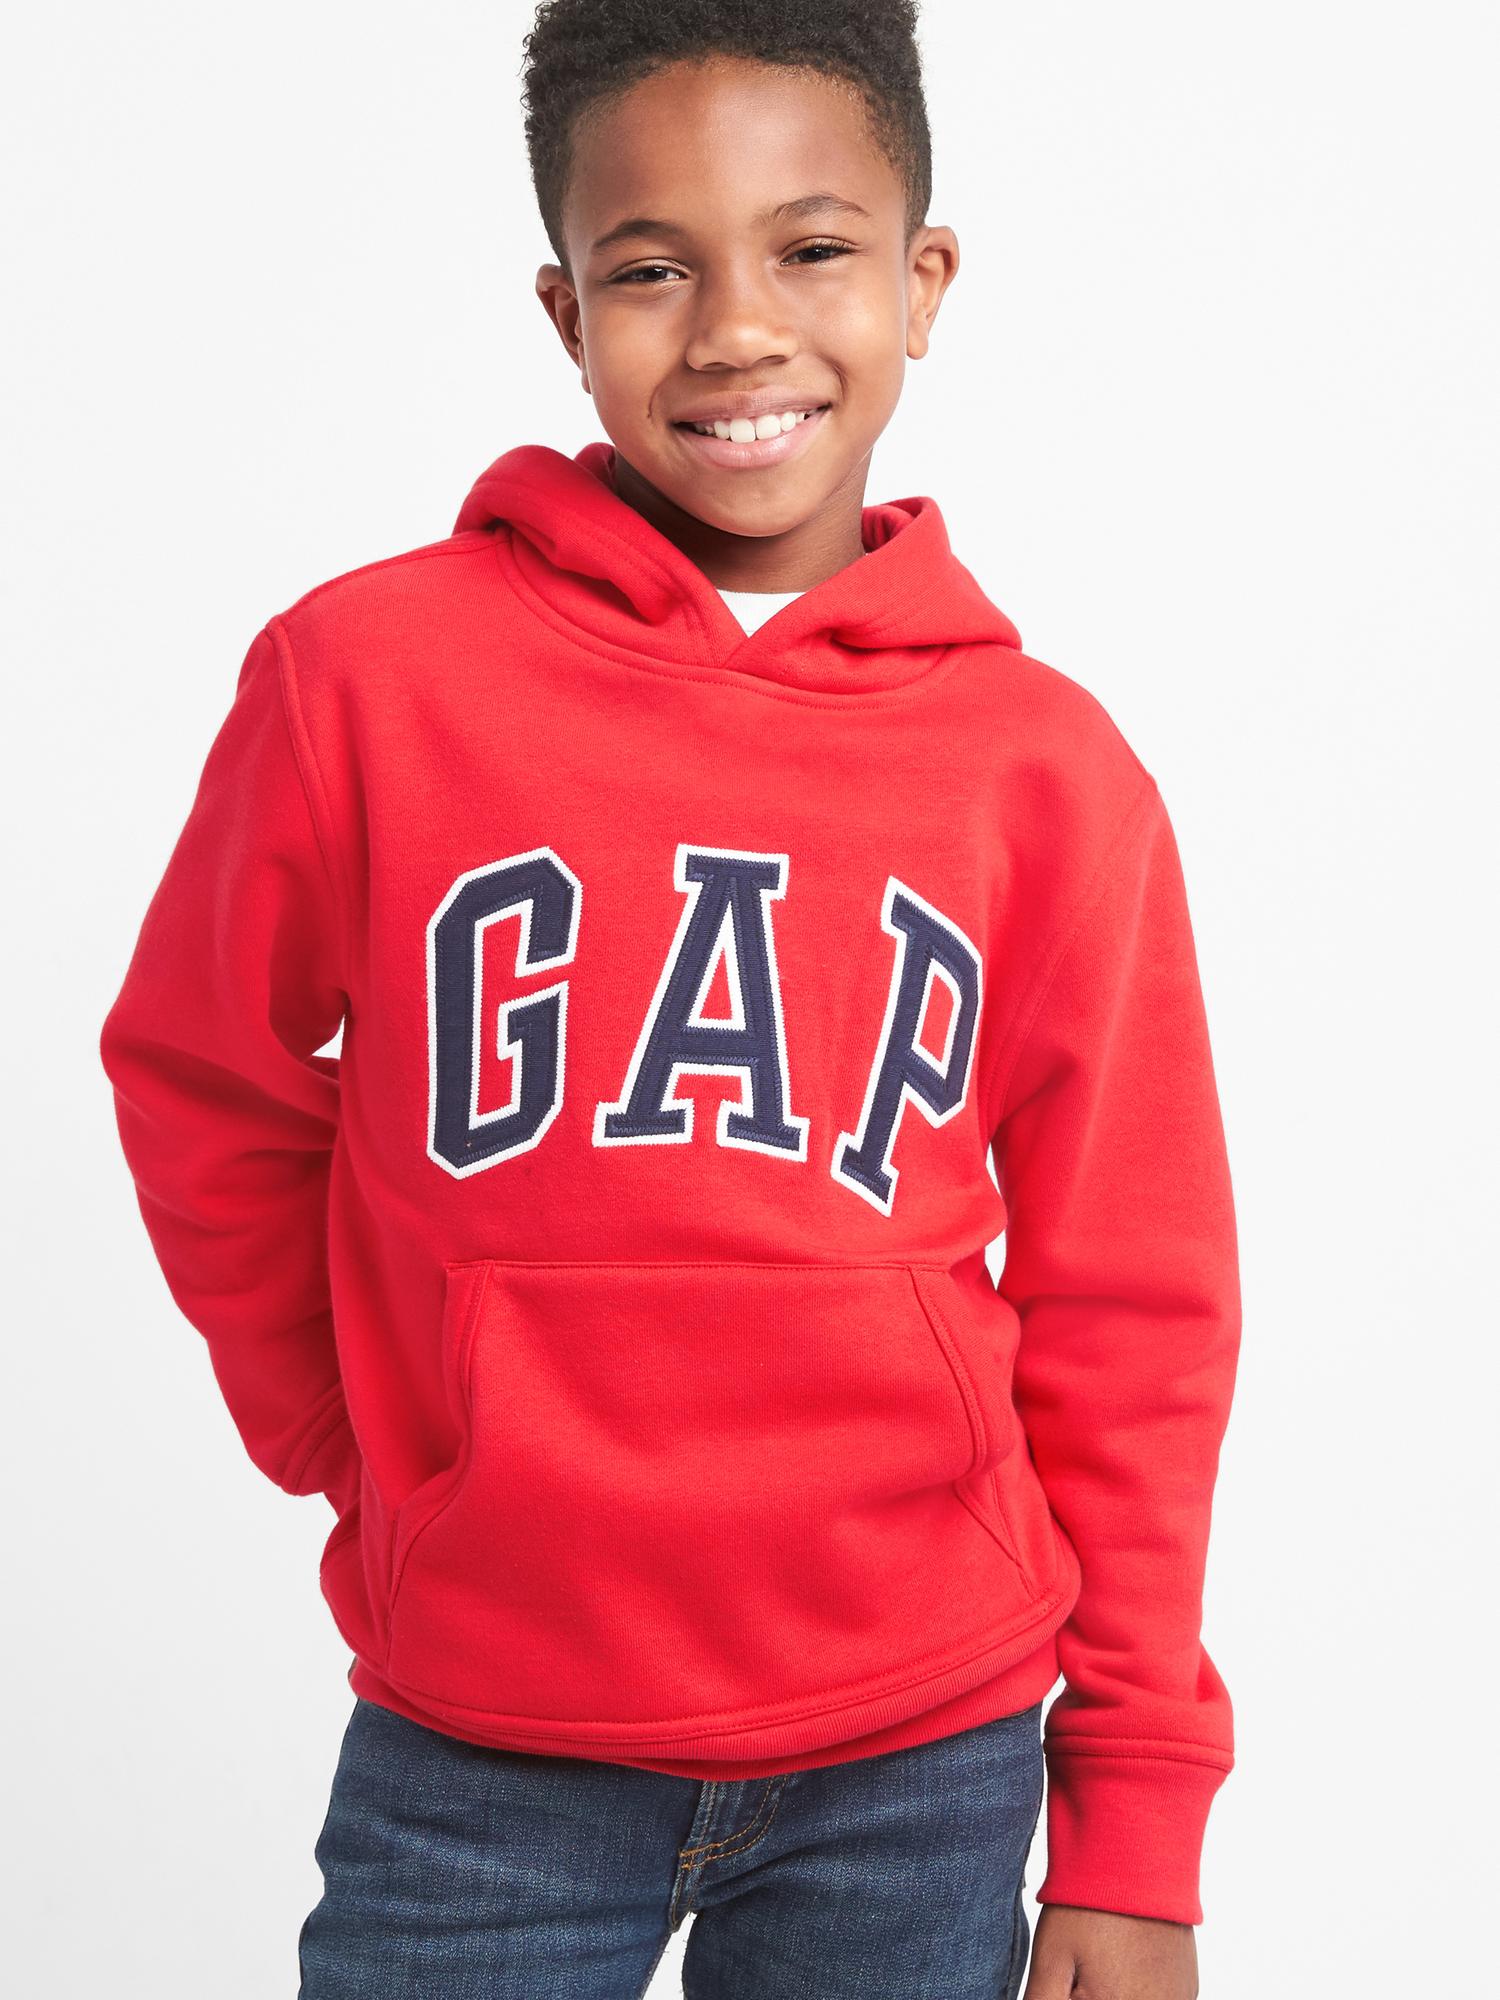 Gap Hoodie Camo Sweatshirt Sweater Boys Size Medium 8 Years Old GUC